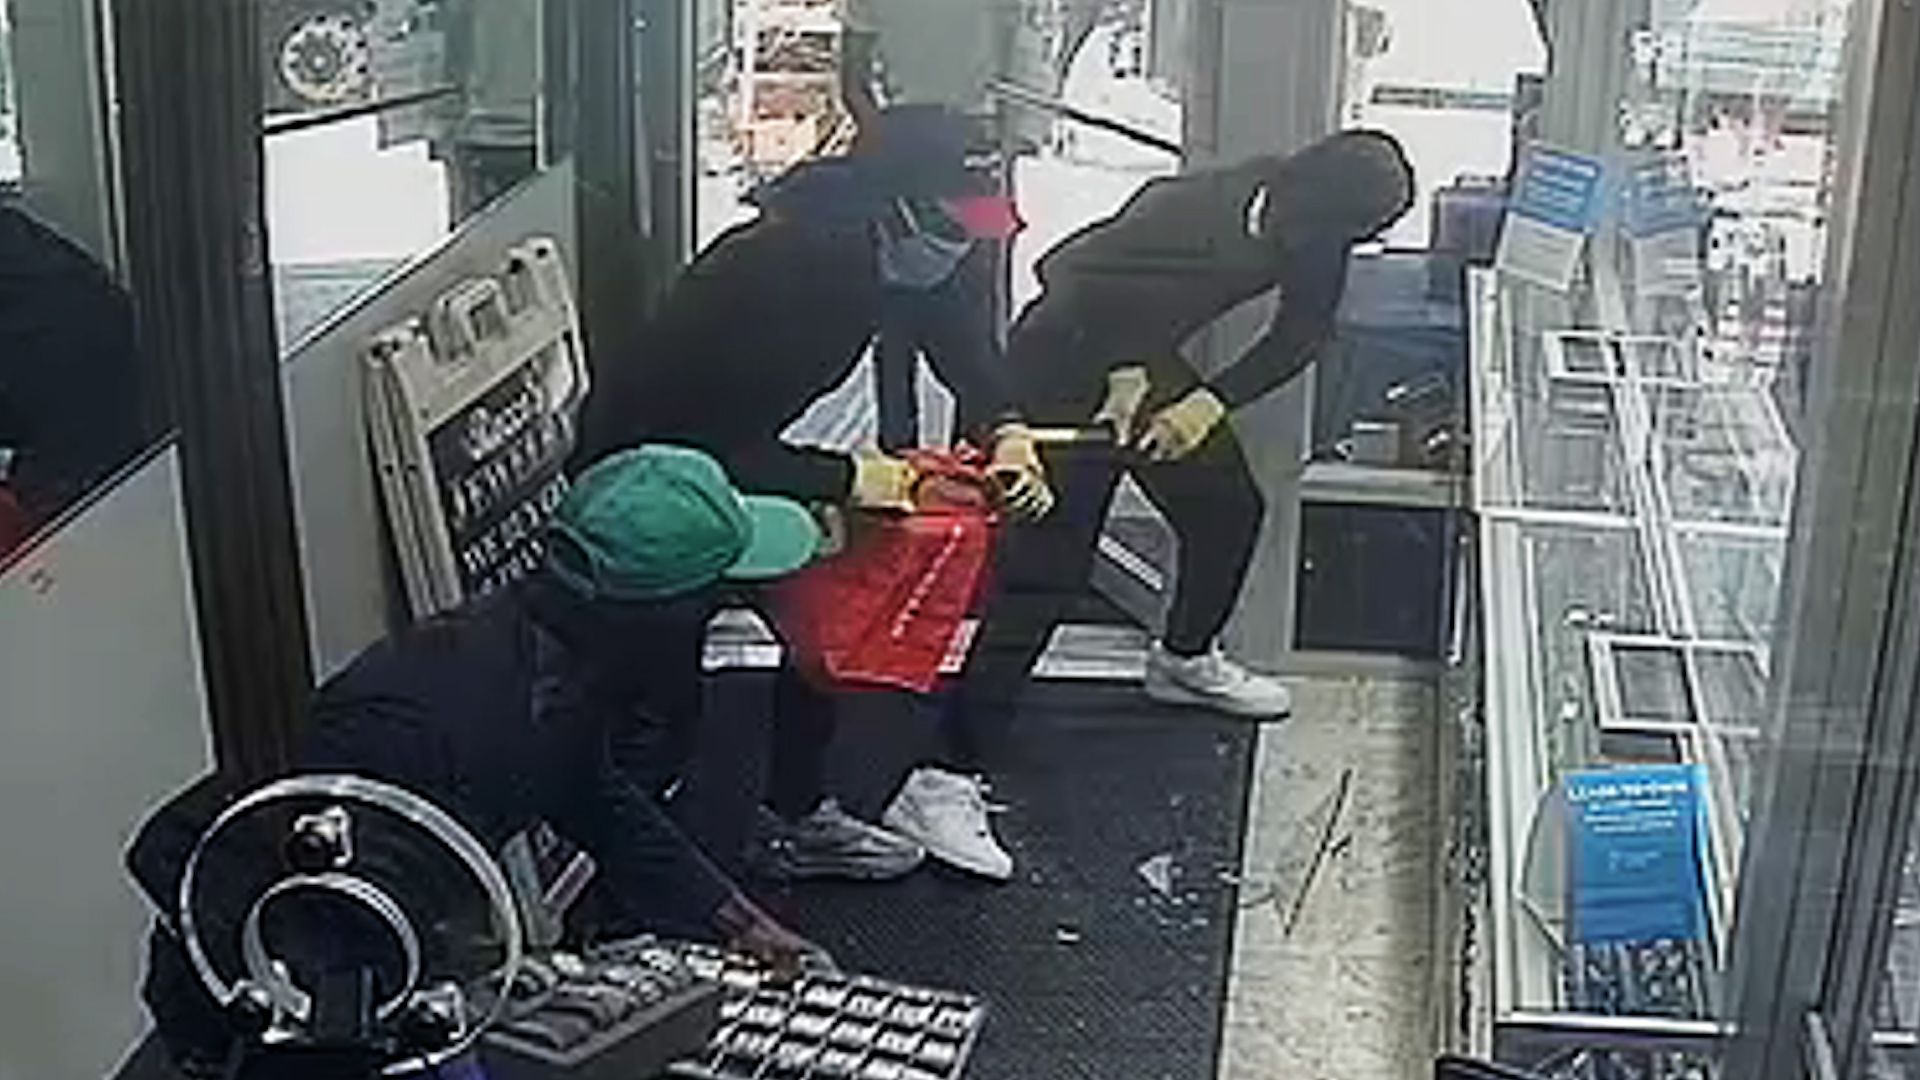 Prada Heist in Manhasset: Masked Robbers Steal $20,000 Worth of